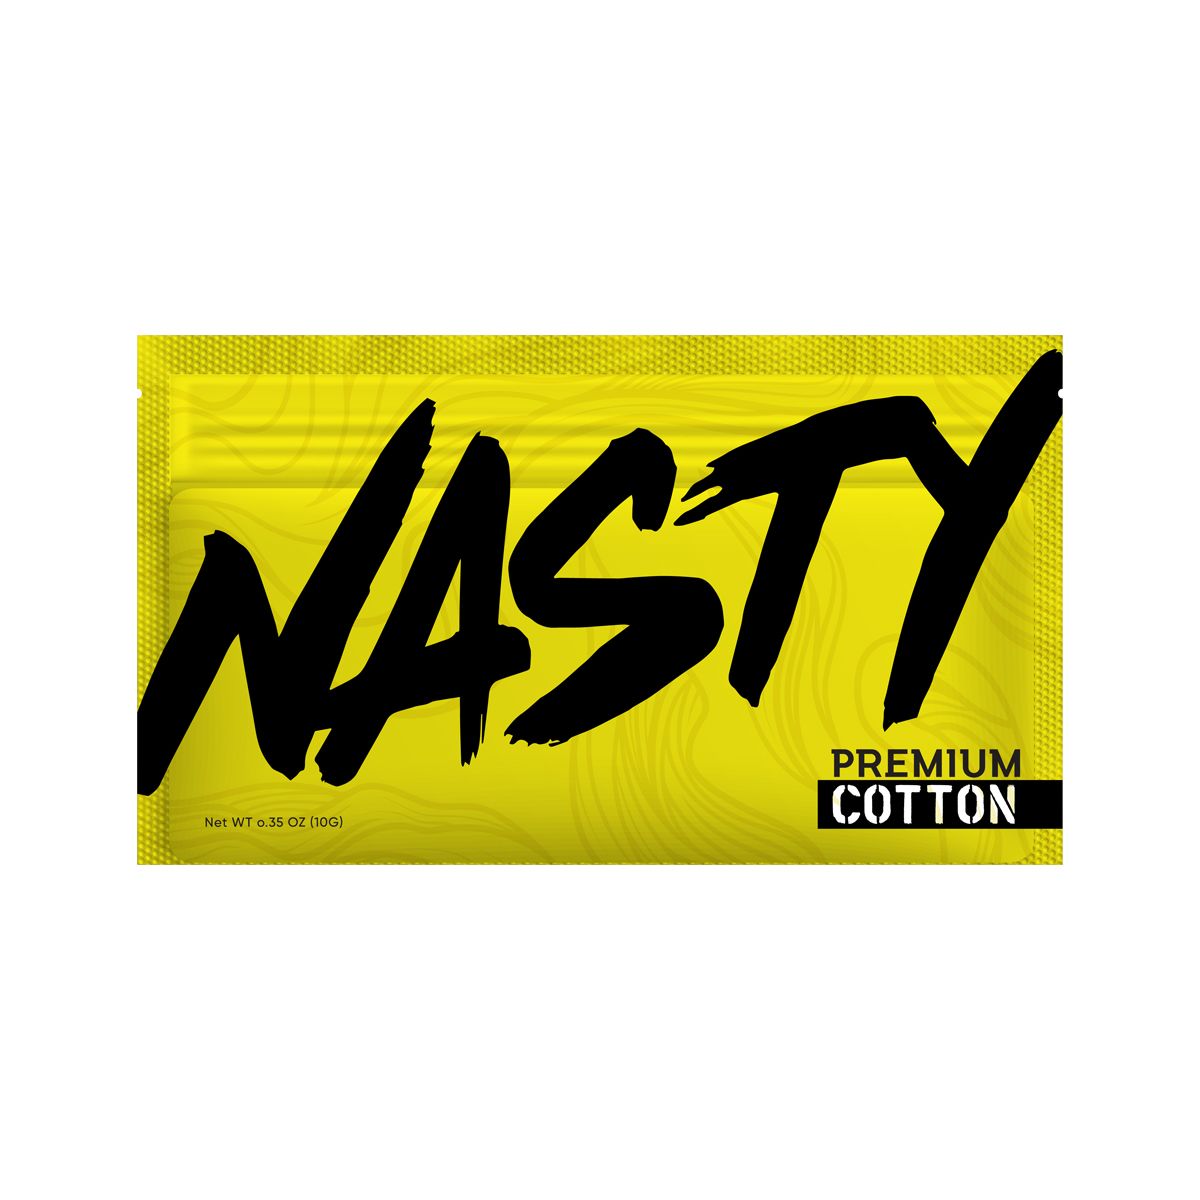 Nasty Premium Cotton